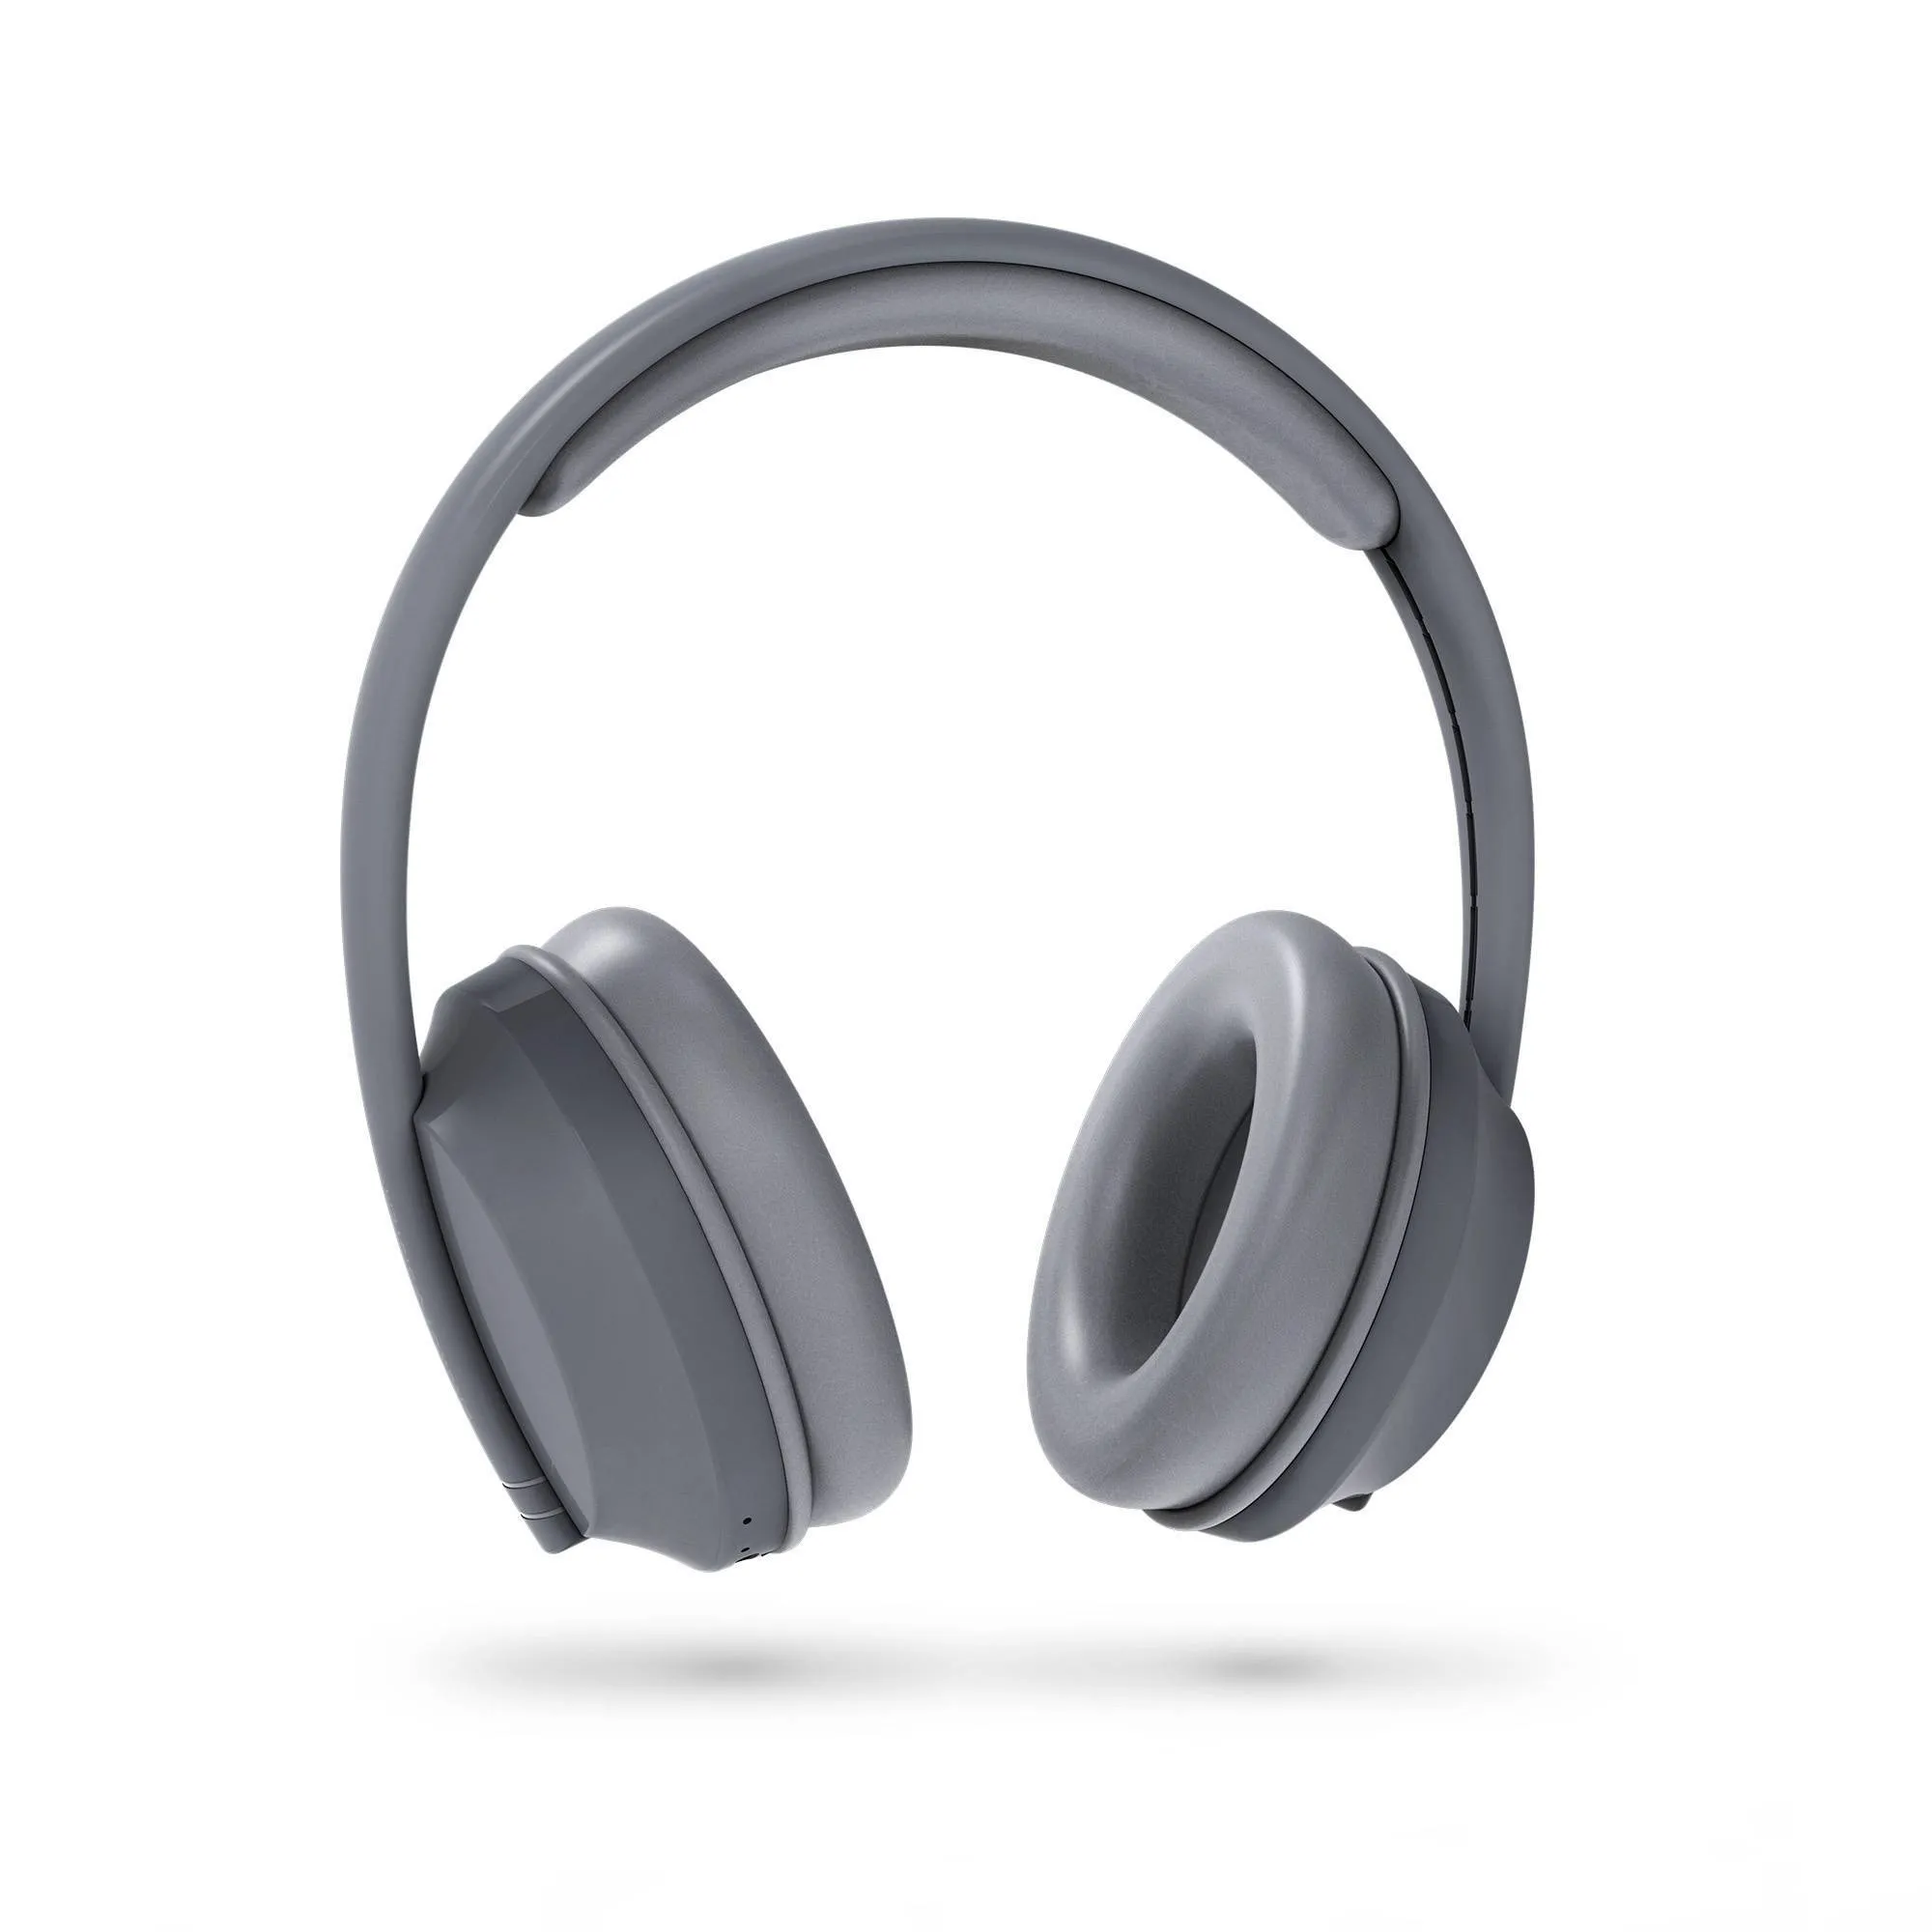 Energy Sistem's Hoshi ECO cloud Bluetooth headphones